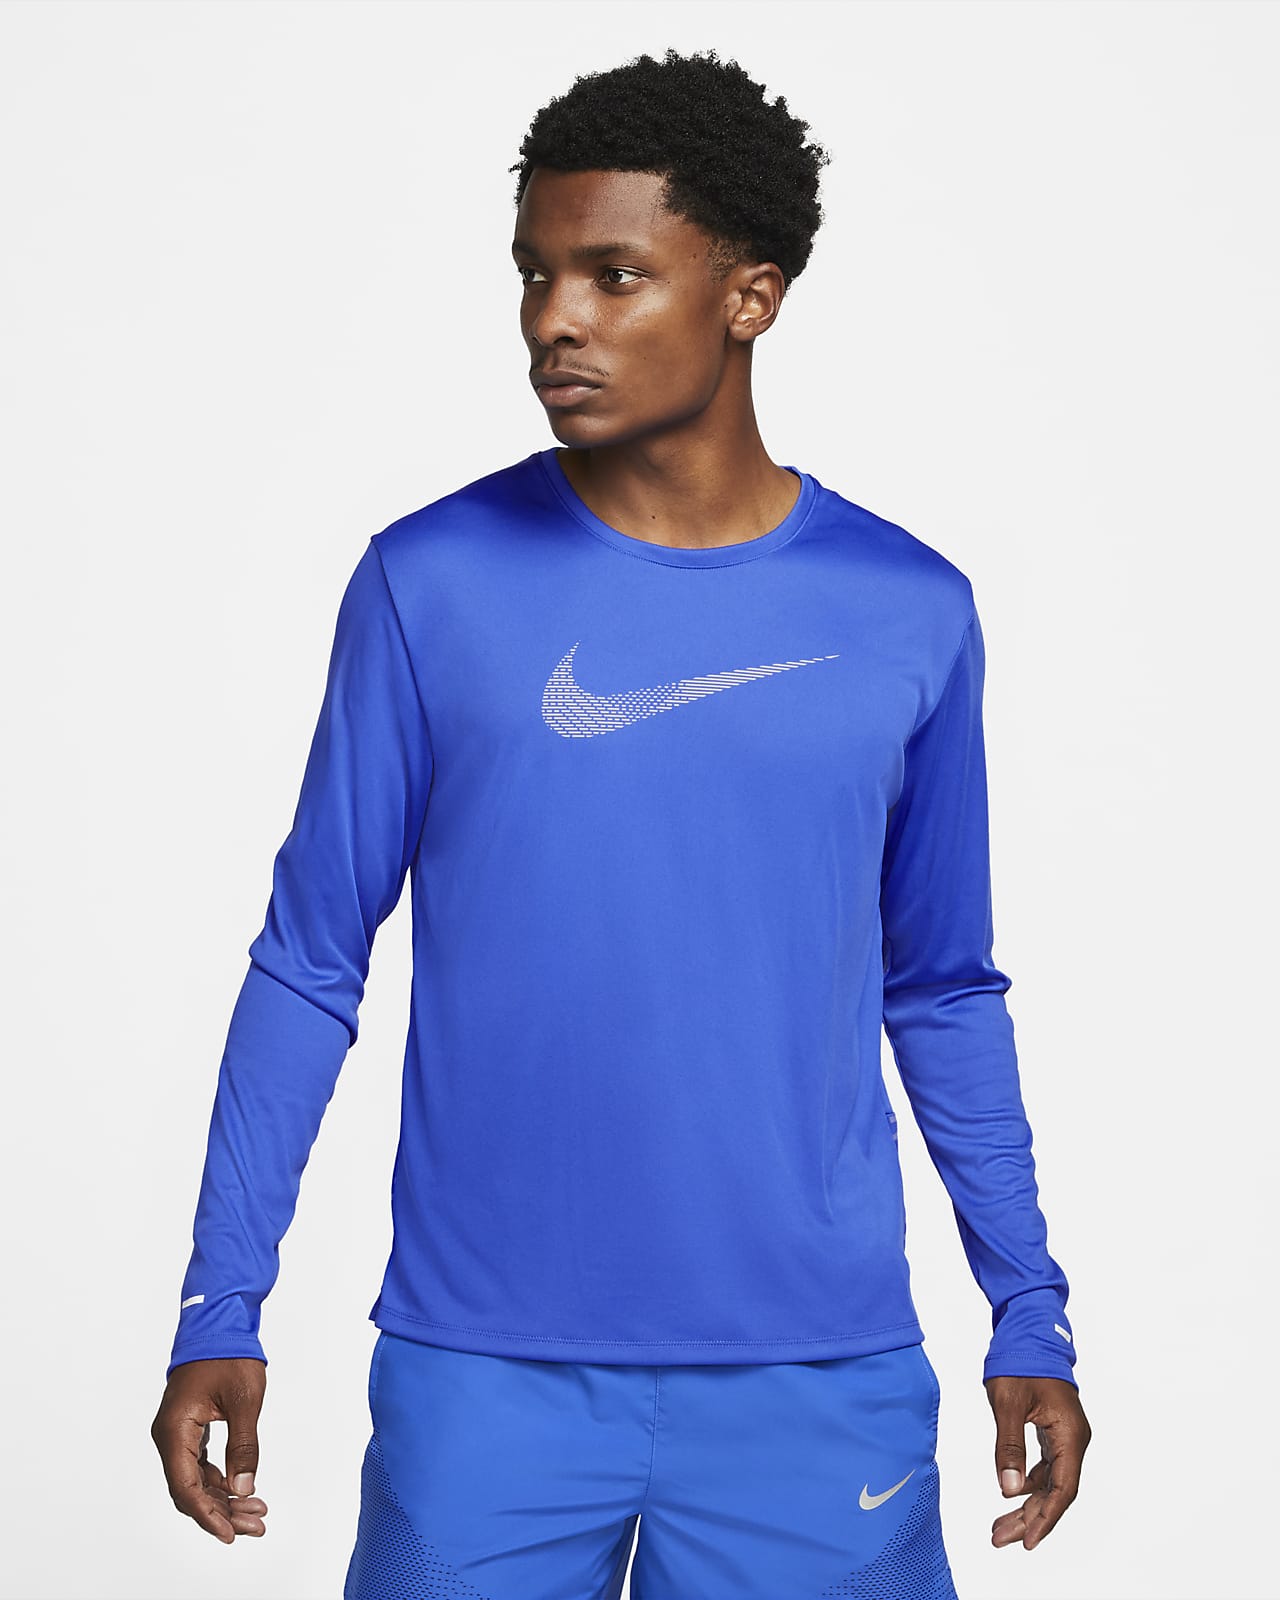 Nike Dri-FIT UV Run Division Miler Men's Long-Sleeve Running Top